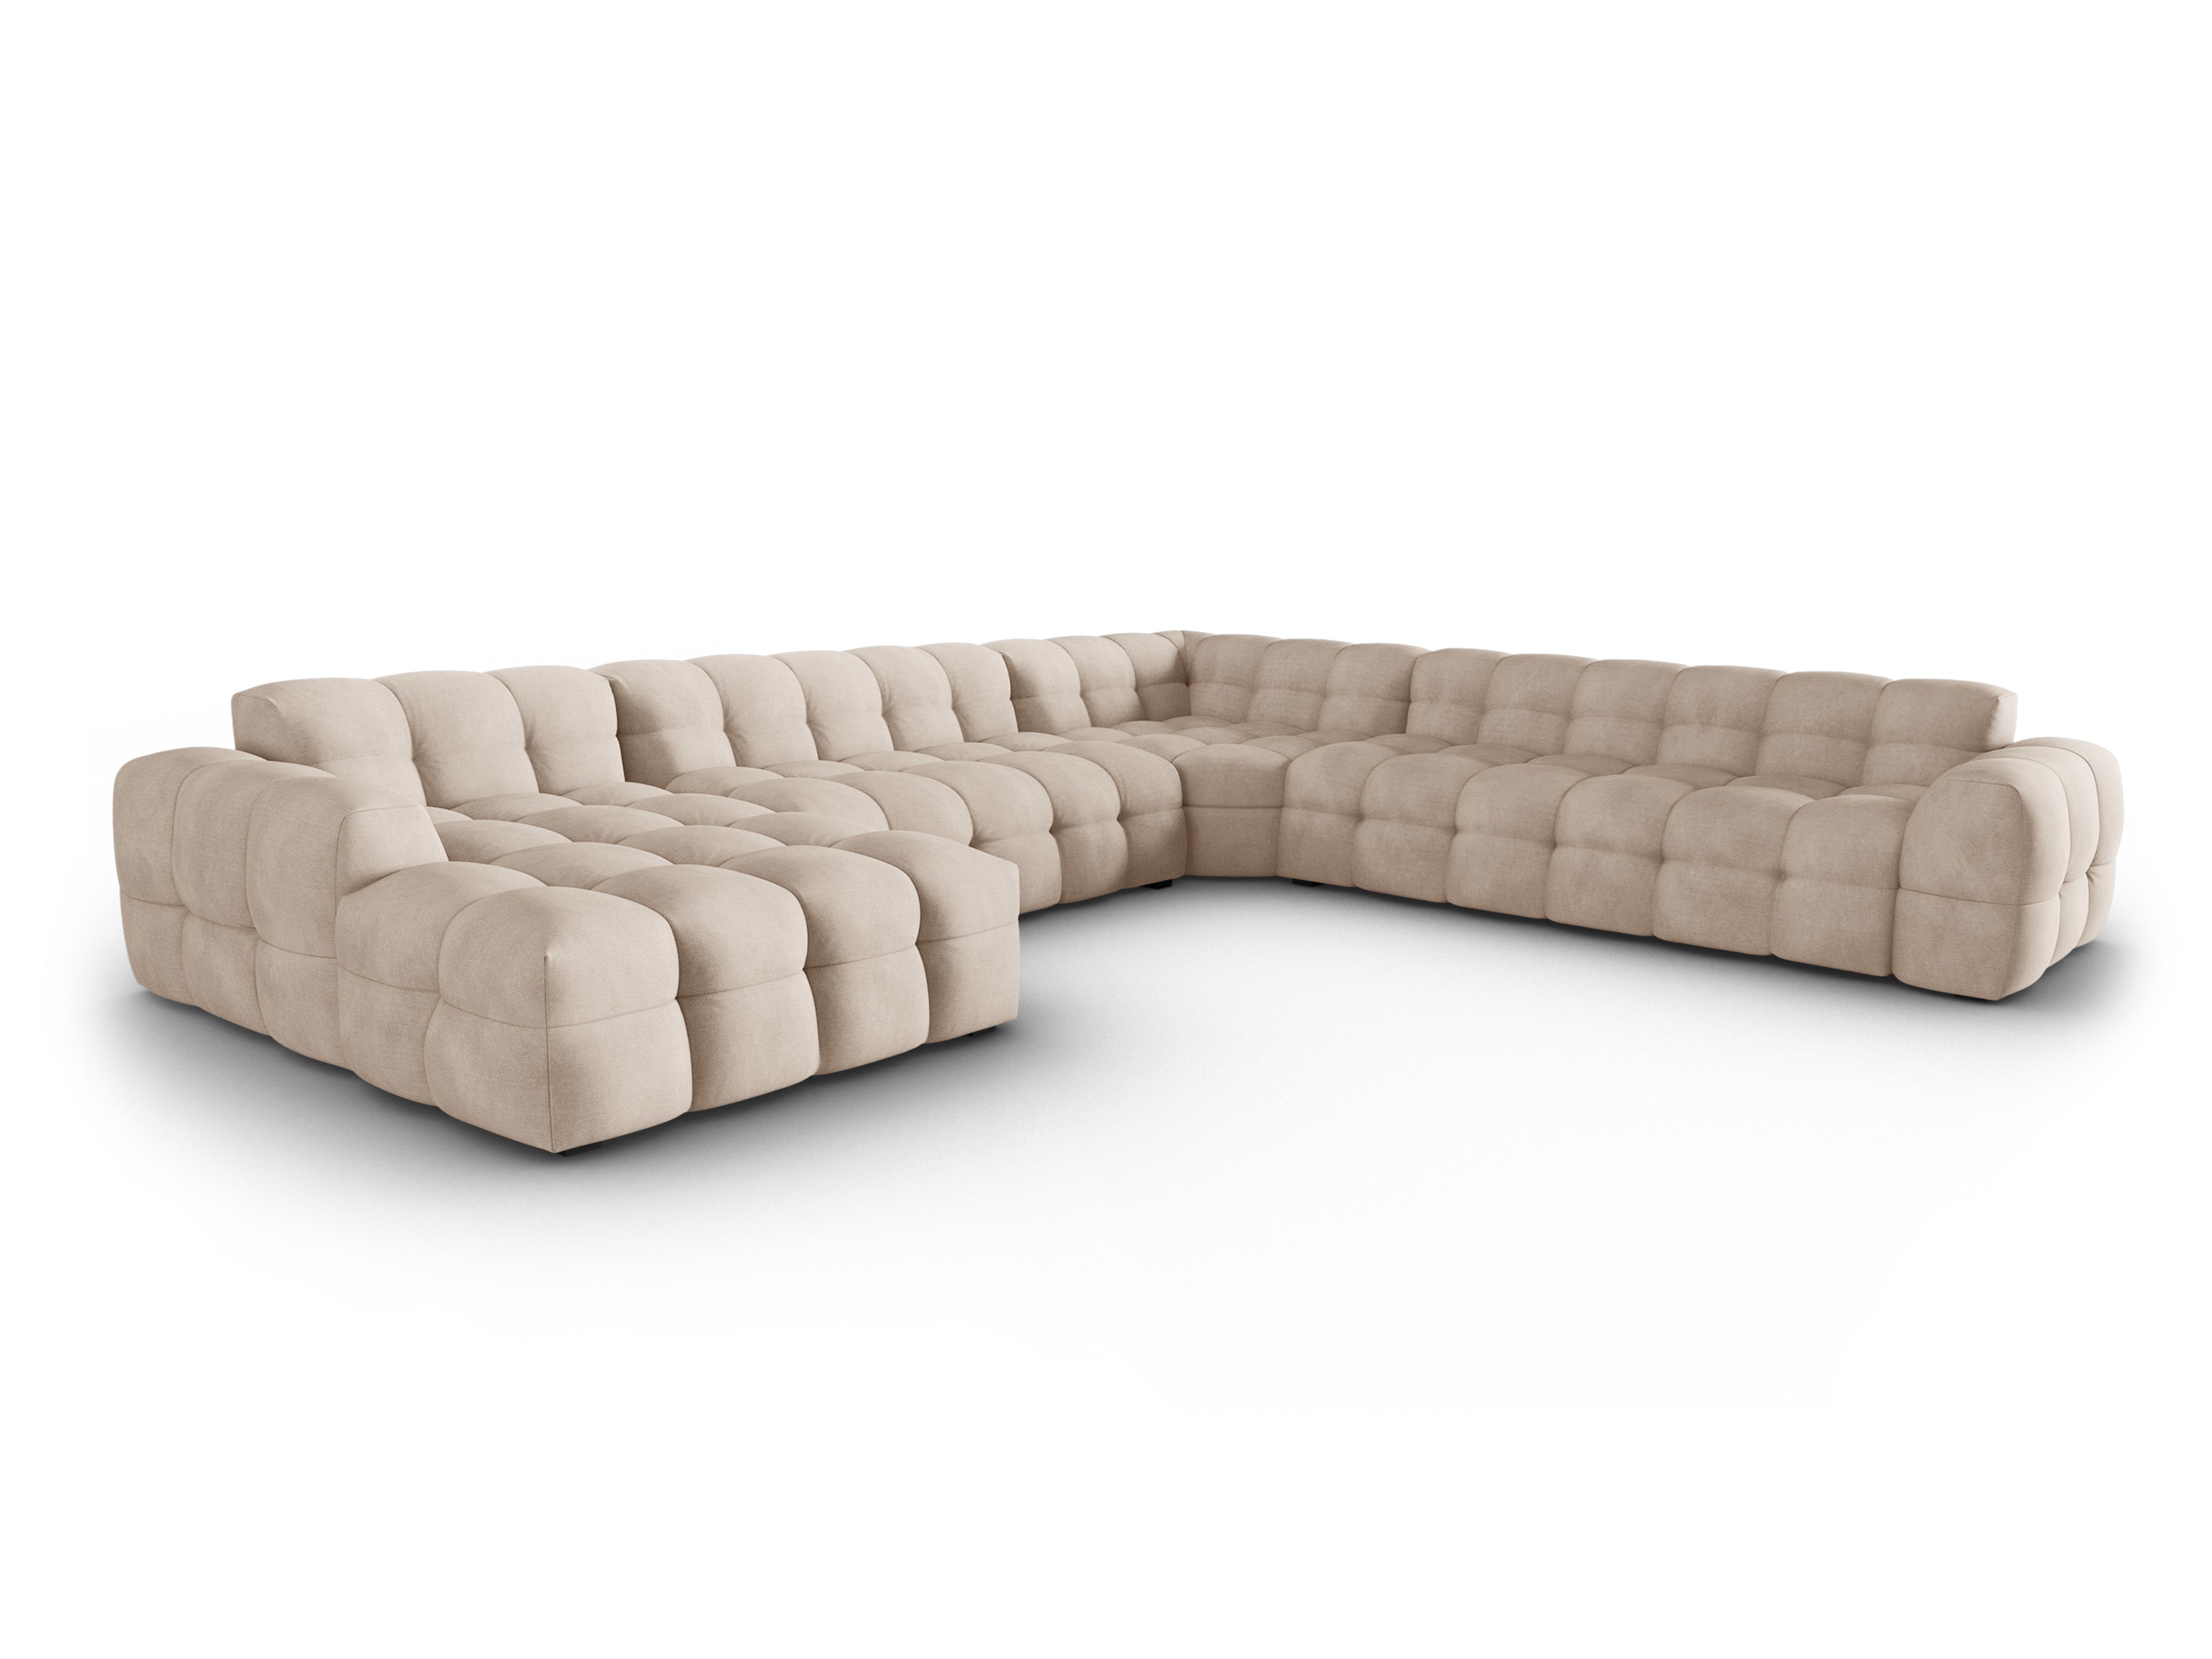 Panoramic Right Corner Sofa, "Nino", 7 Seats, 378x322x68
Made in Europe, Maison Heritage, Eye on Design